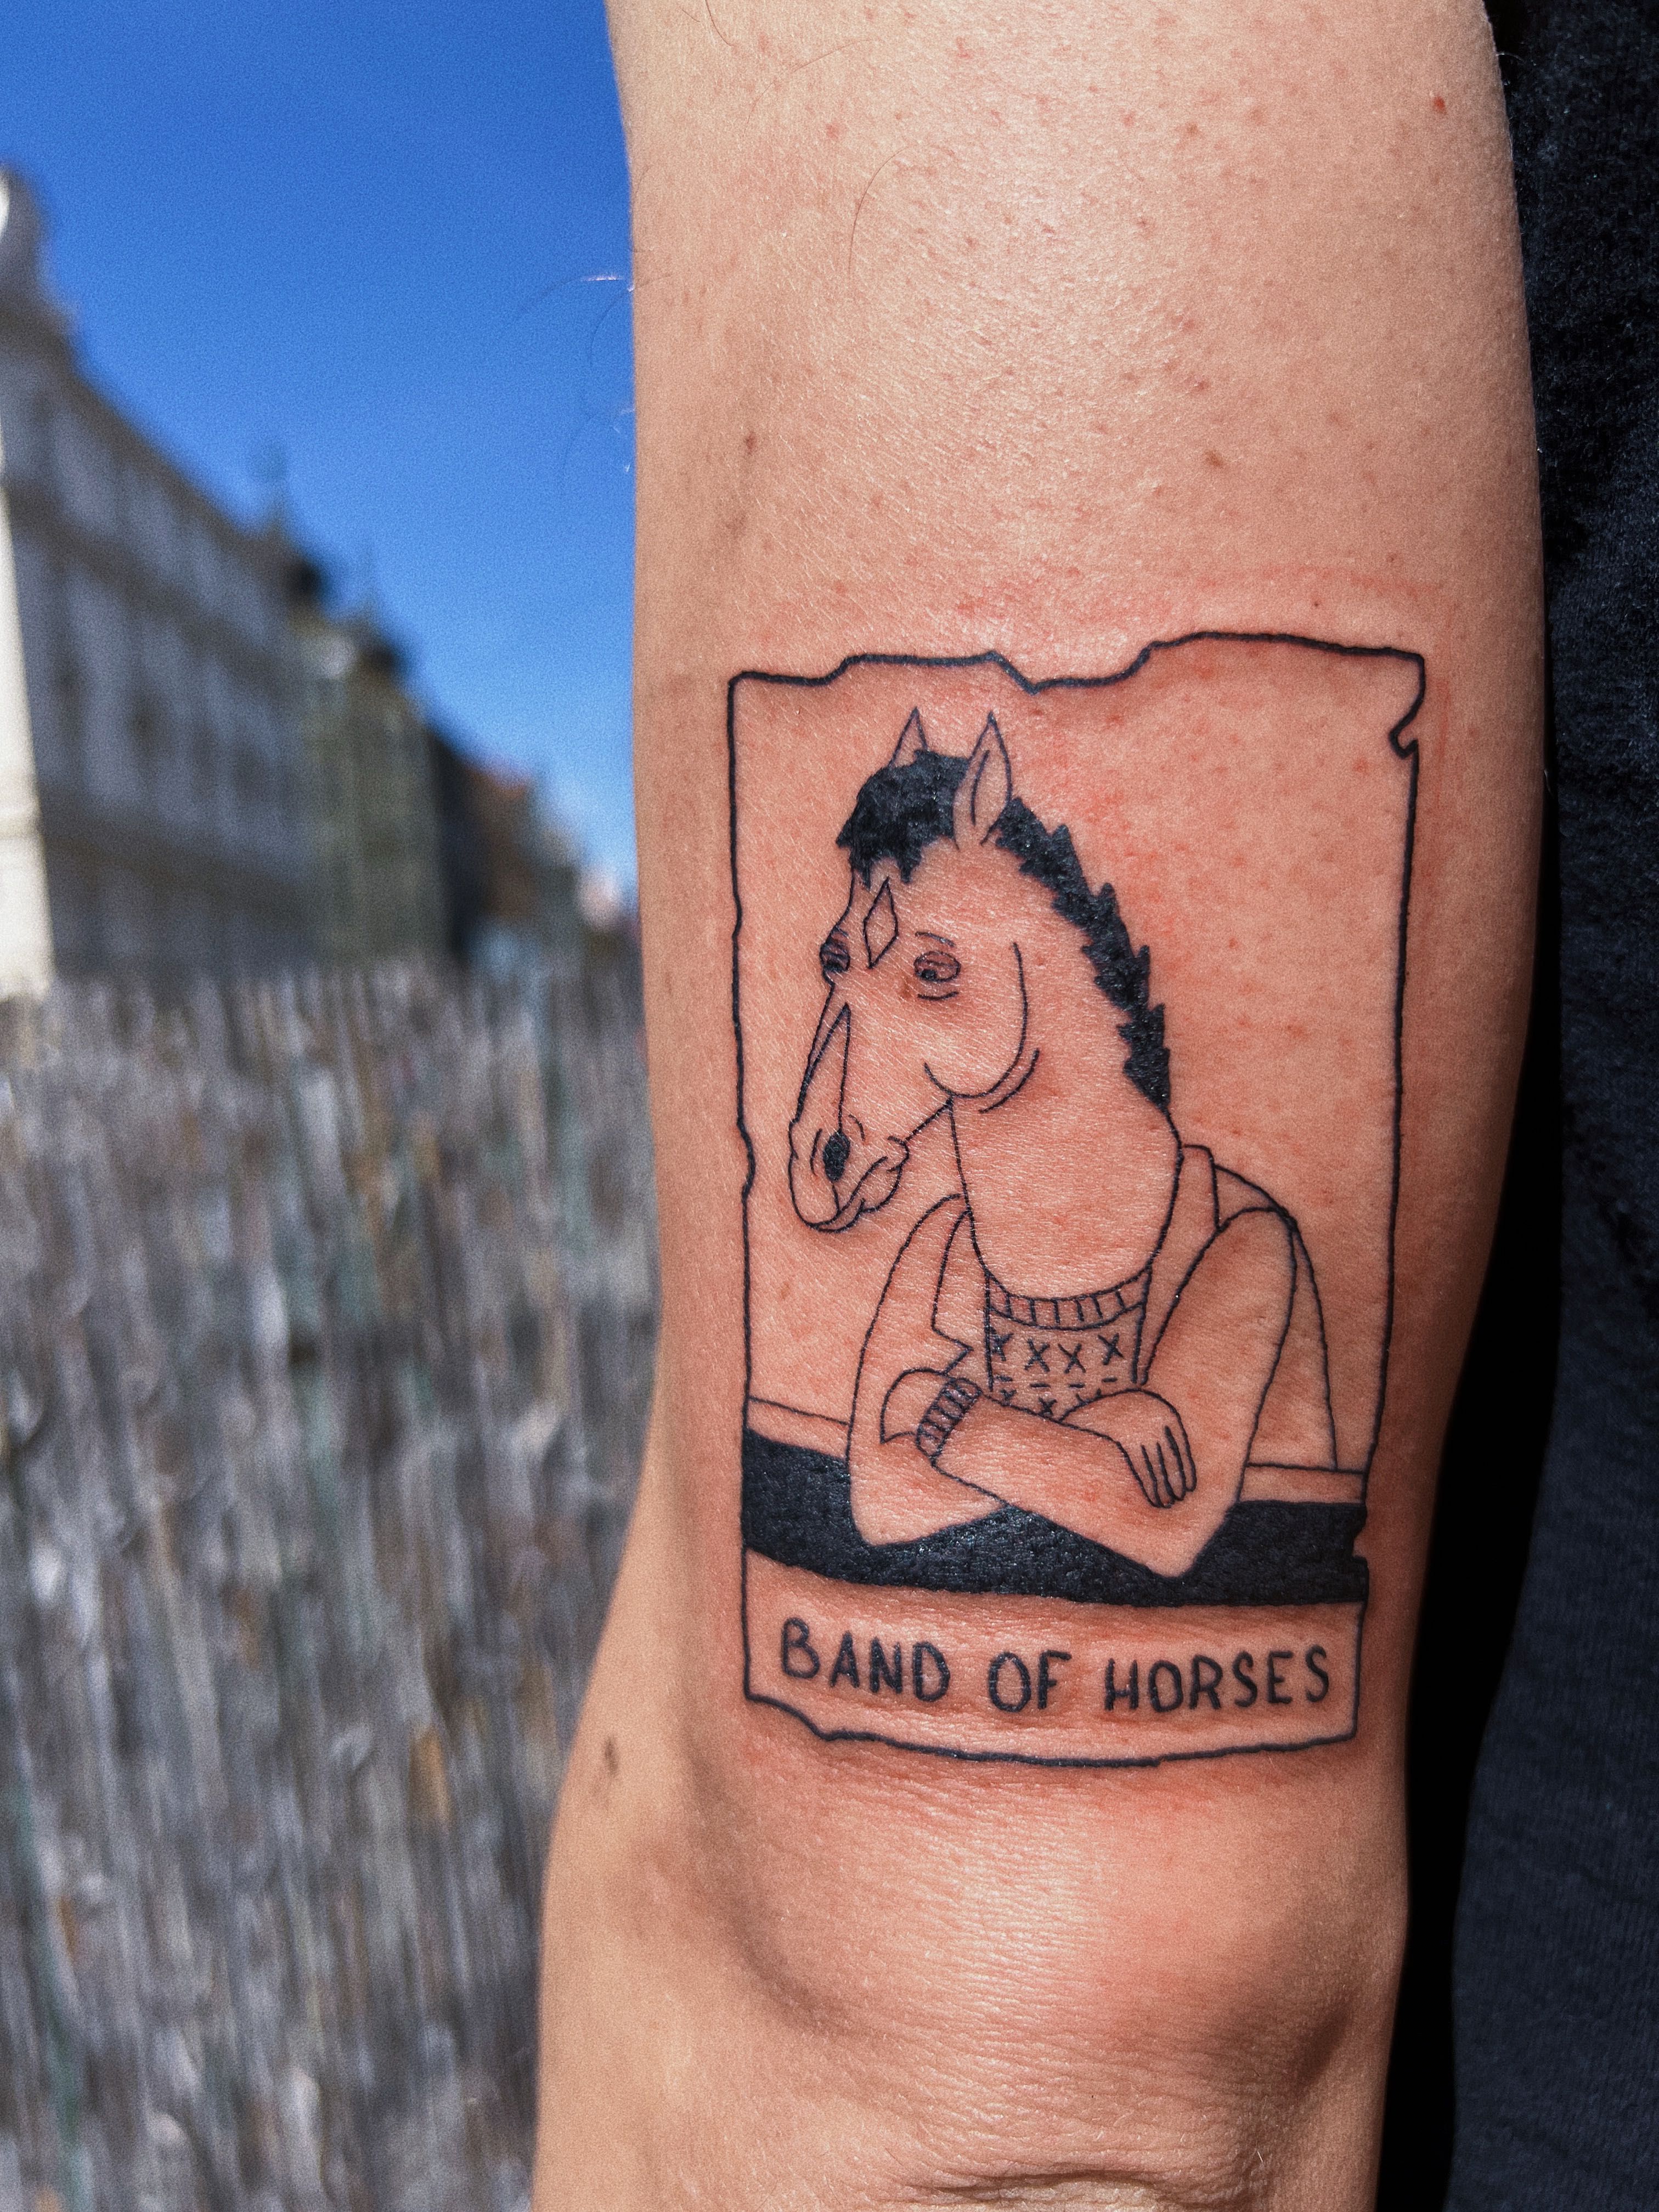 My Bojack Horseman thigh tattoo - Imgur